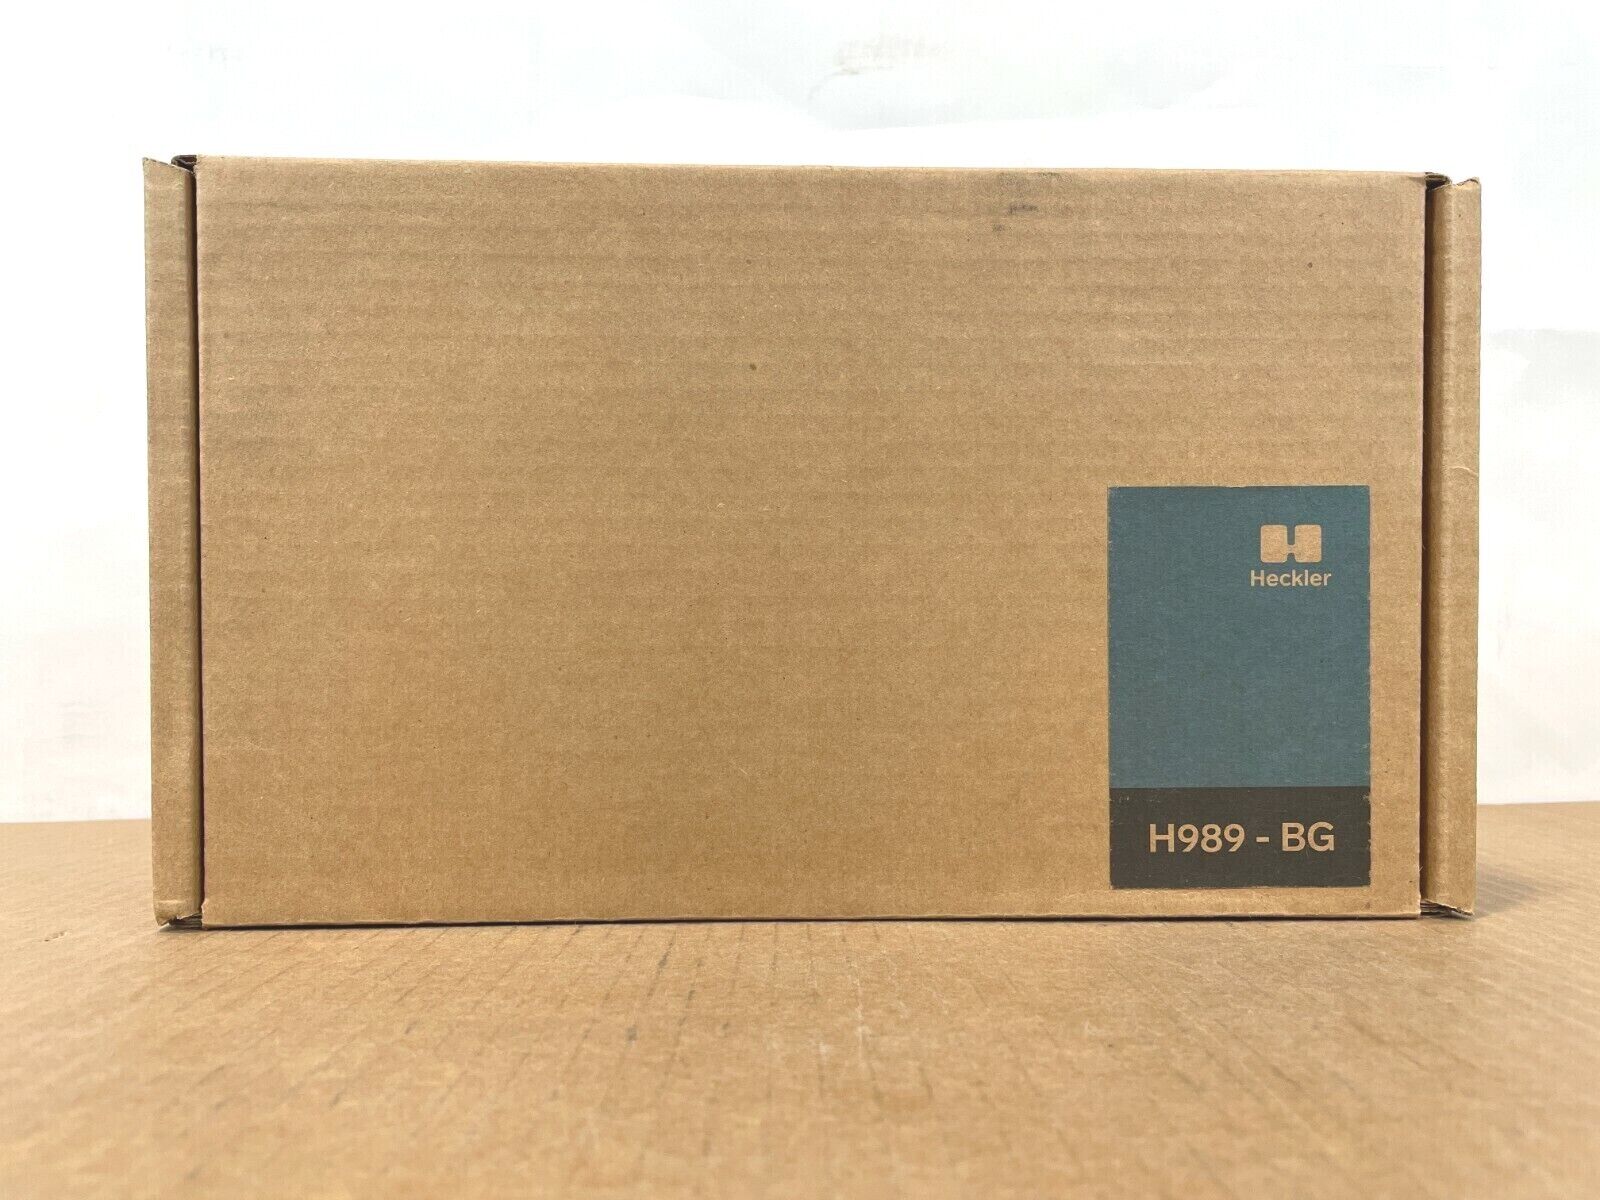 NEW Heckler H989-BG Design Zoom Room Console (Lenovo) ✅❤️️✅❤️️ NEW Open Box